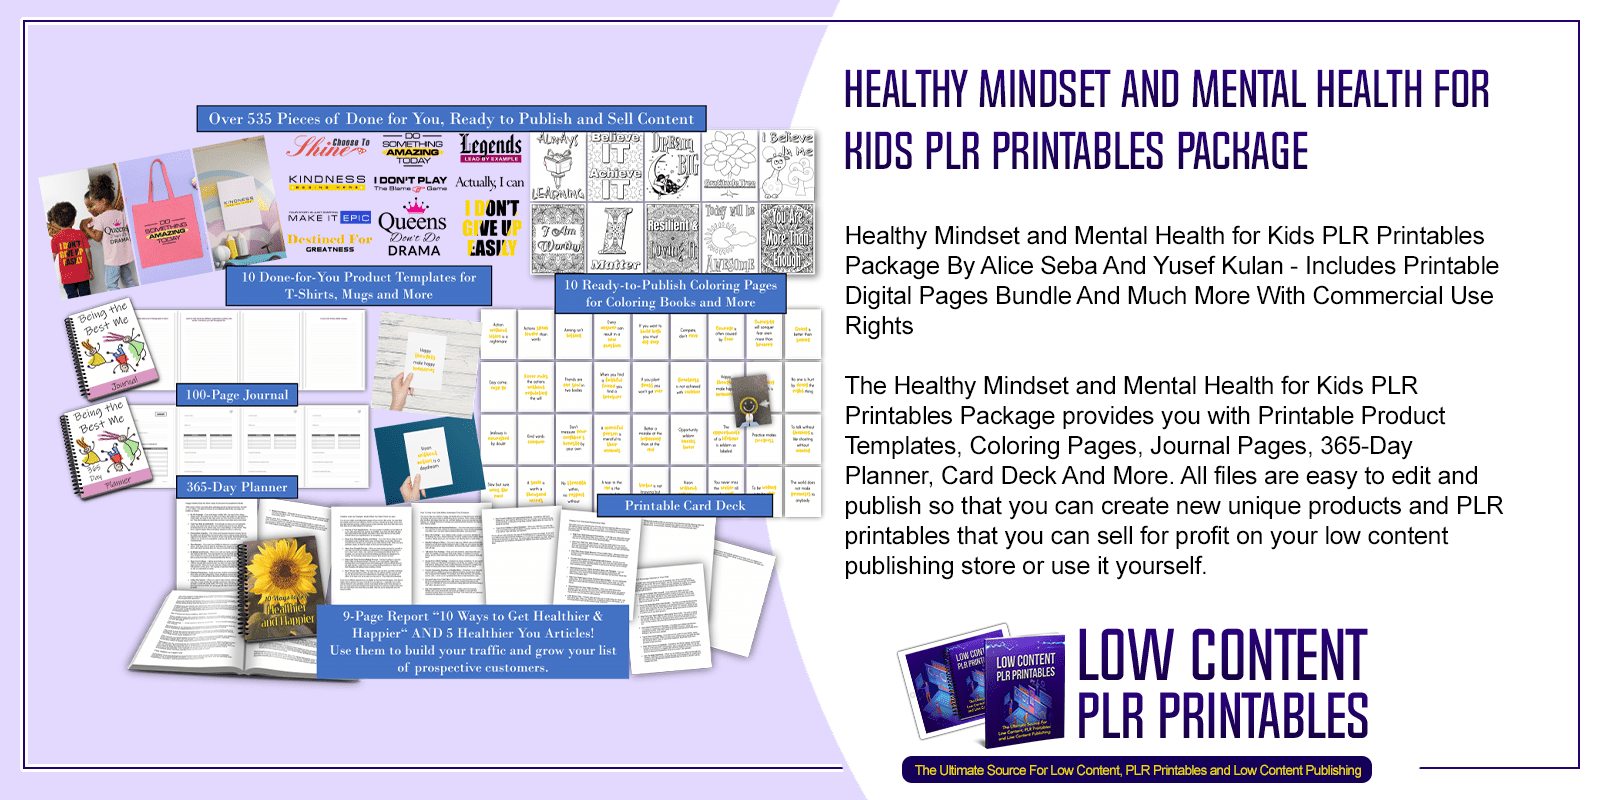 Healthy Mindset and Mental Health for Kids PLR Printables Package